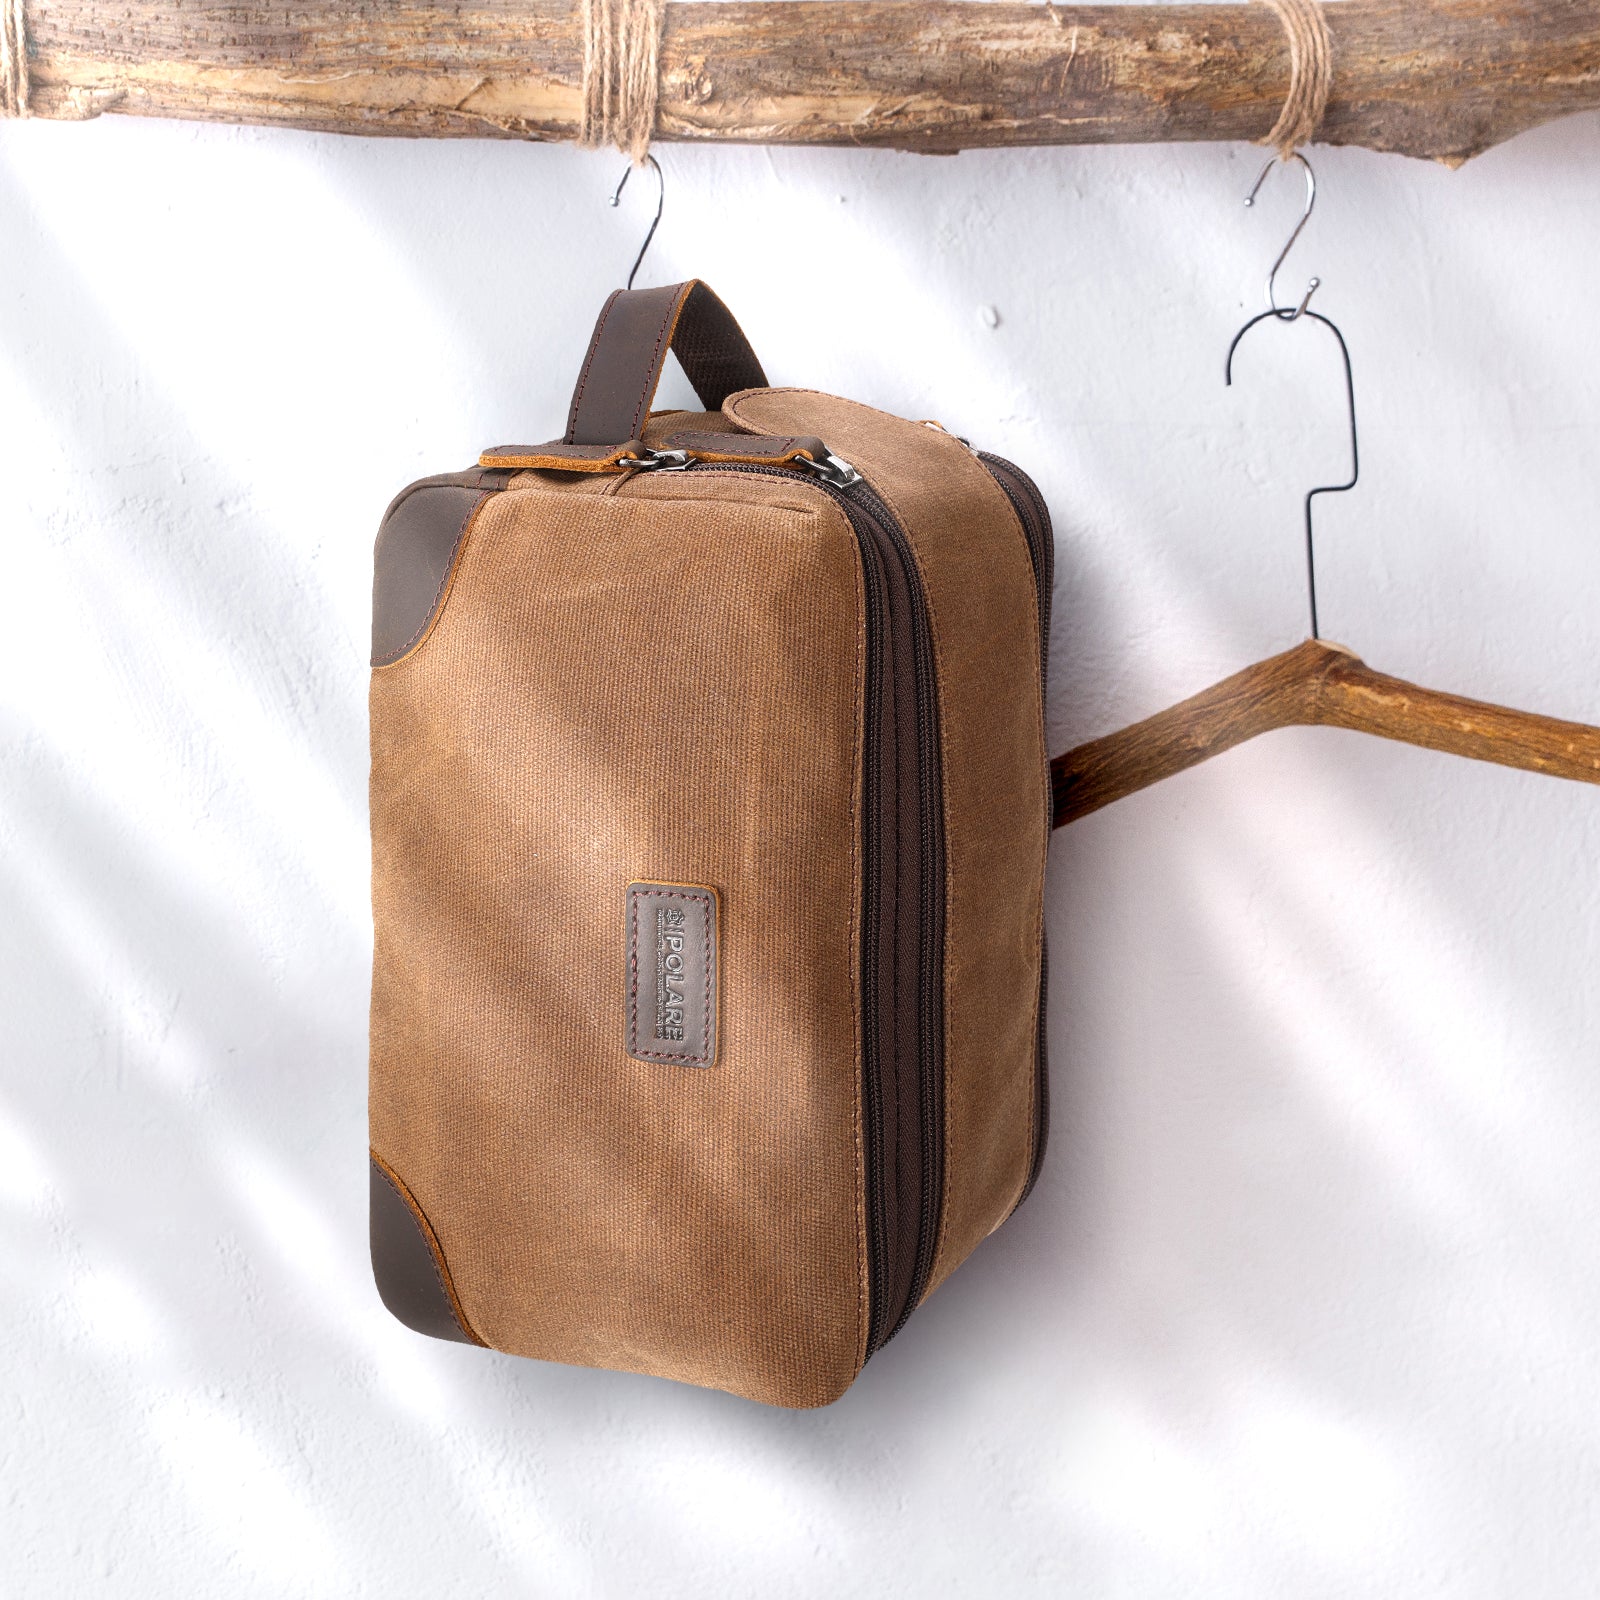 Waxed Canvas Leather Travel Toiletry Bag Travel Dopp Kit (Scenario Shows)